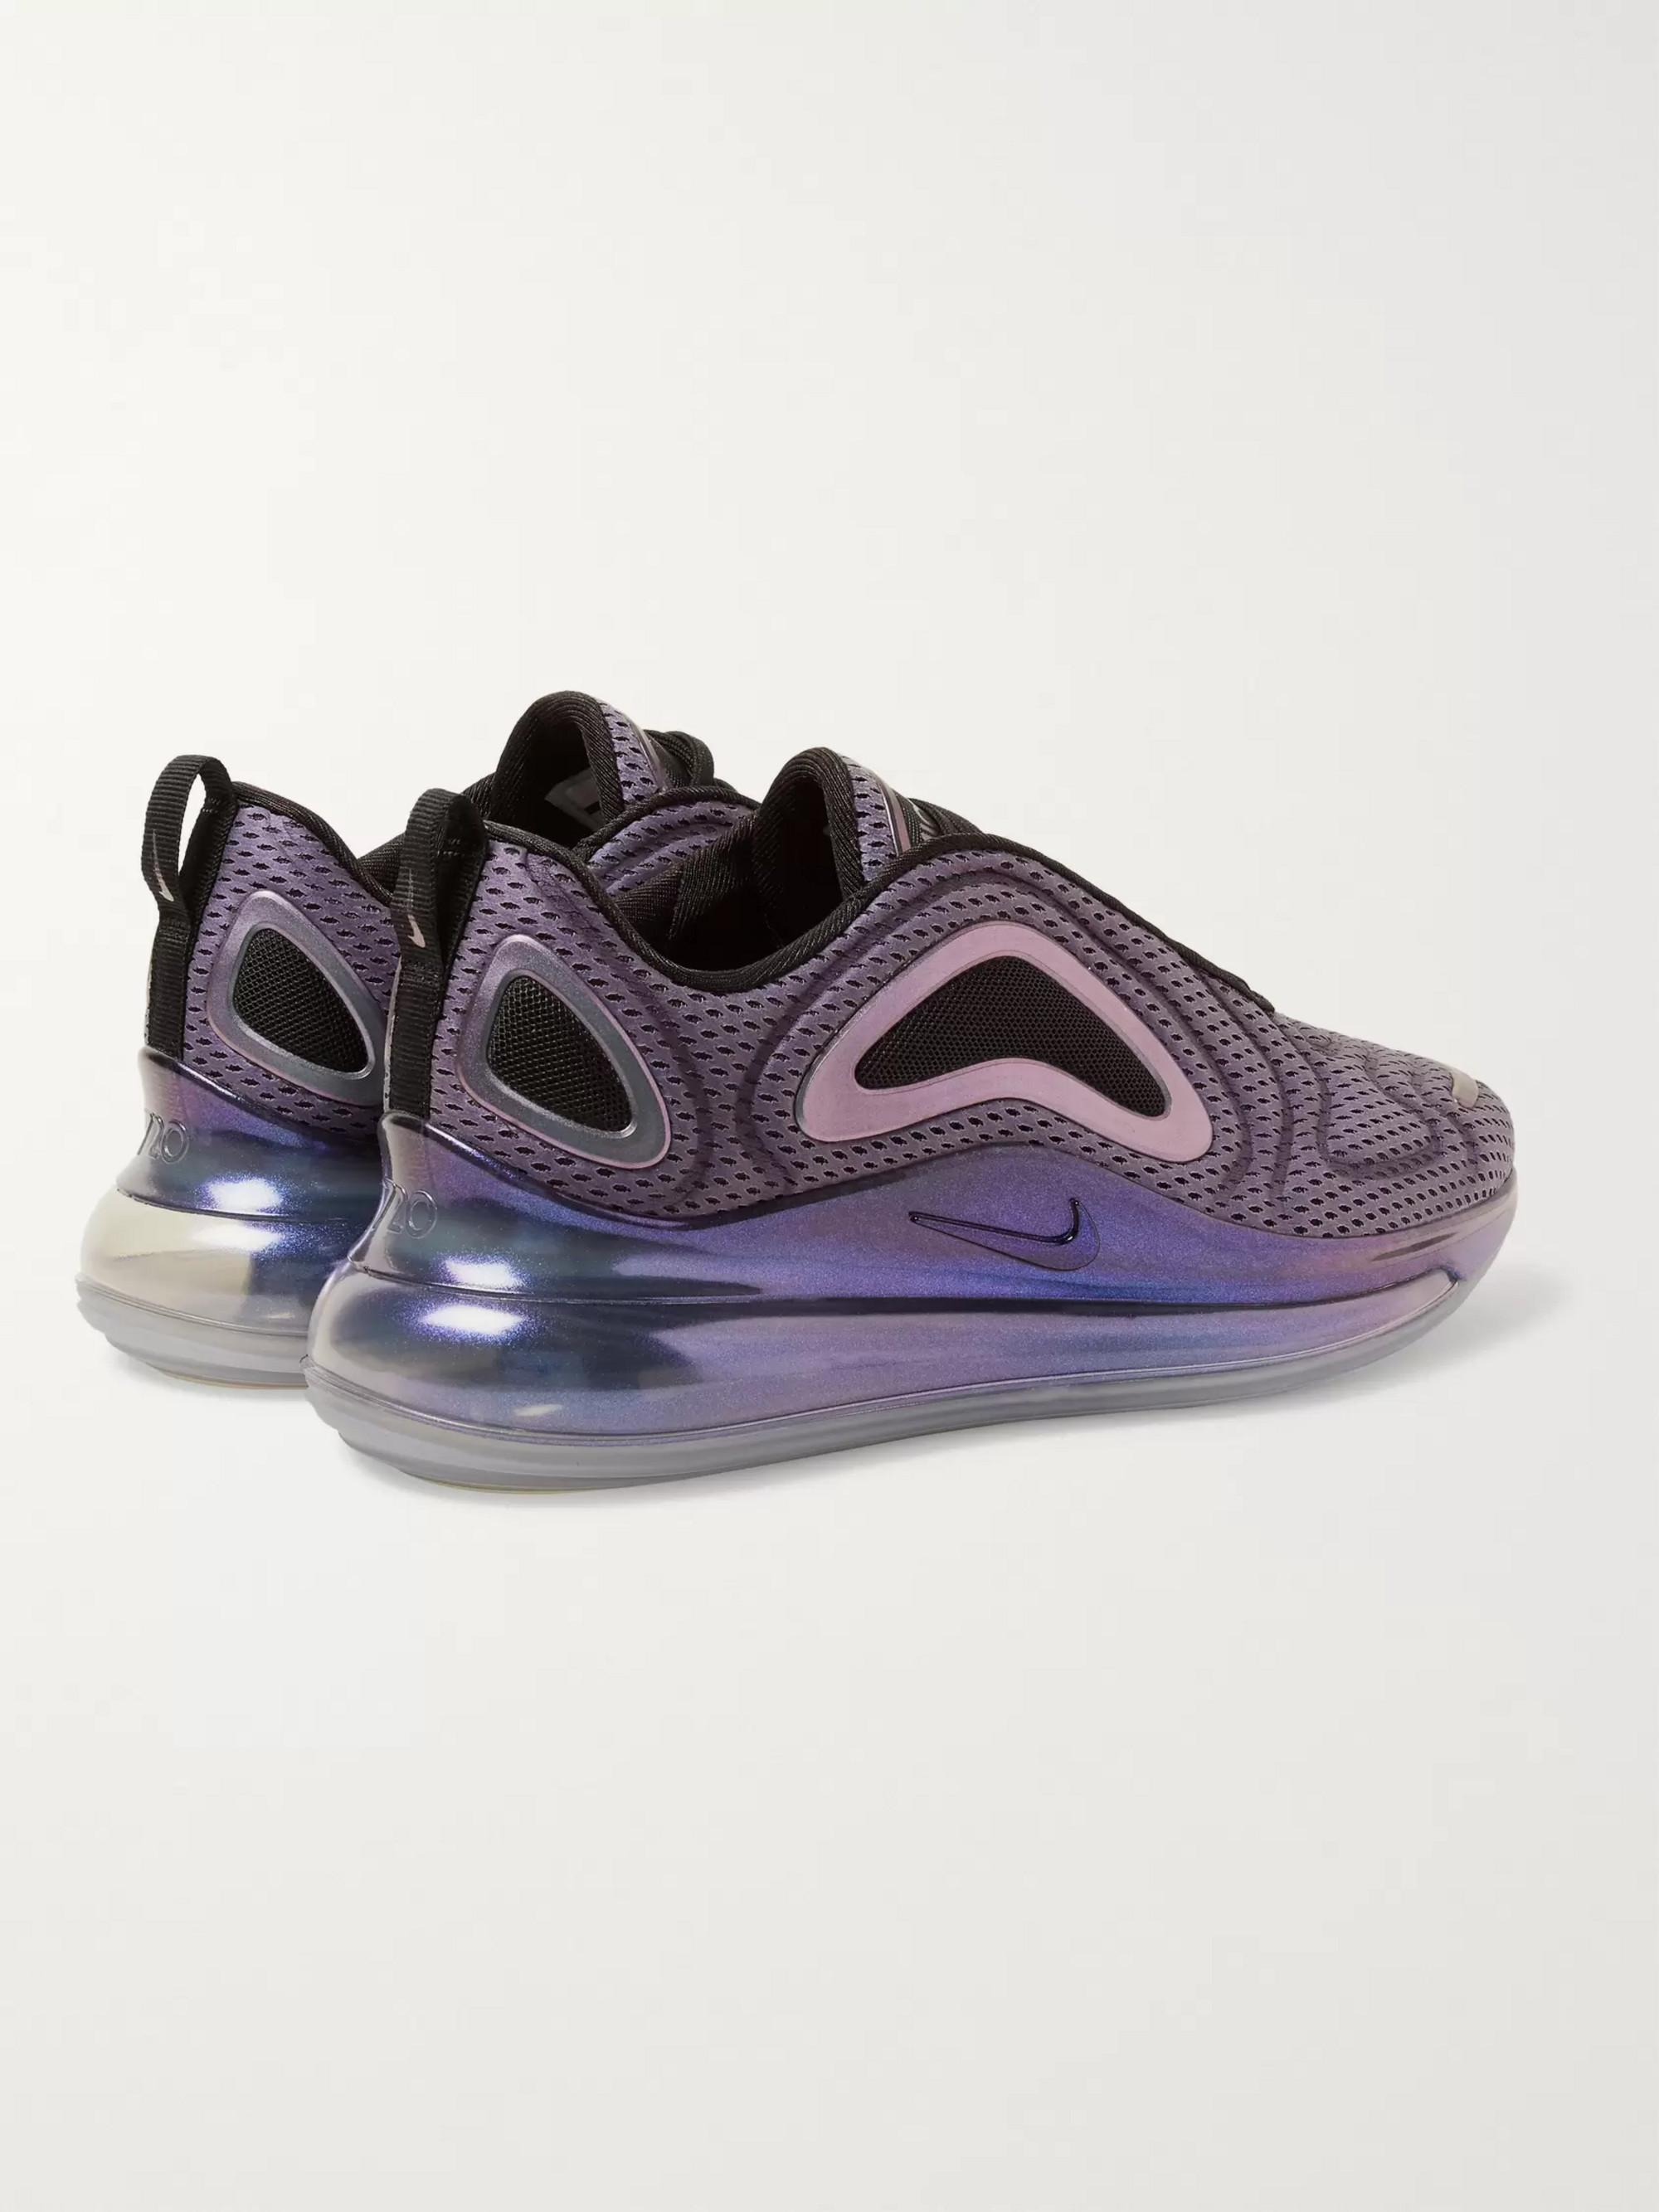 Purple Air Max 720 Aurora Borealis Mesh Sneakers | Nike | MR PORTER